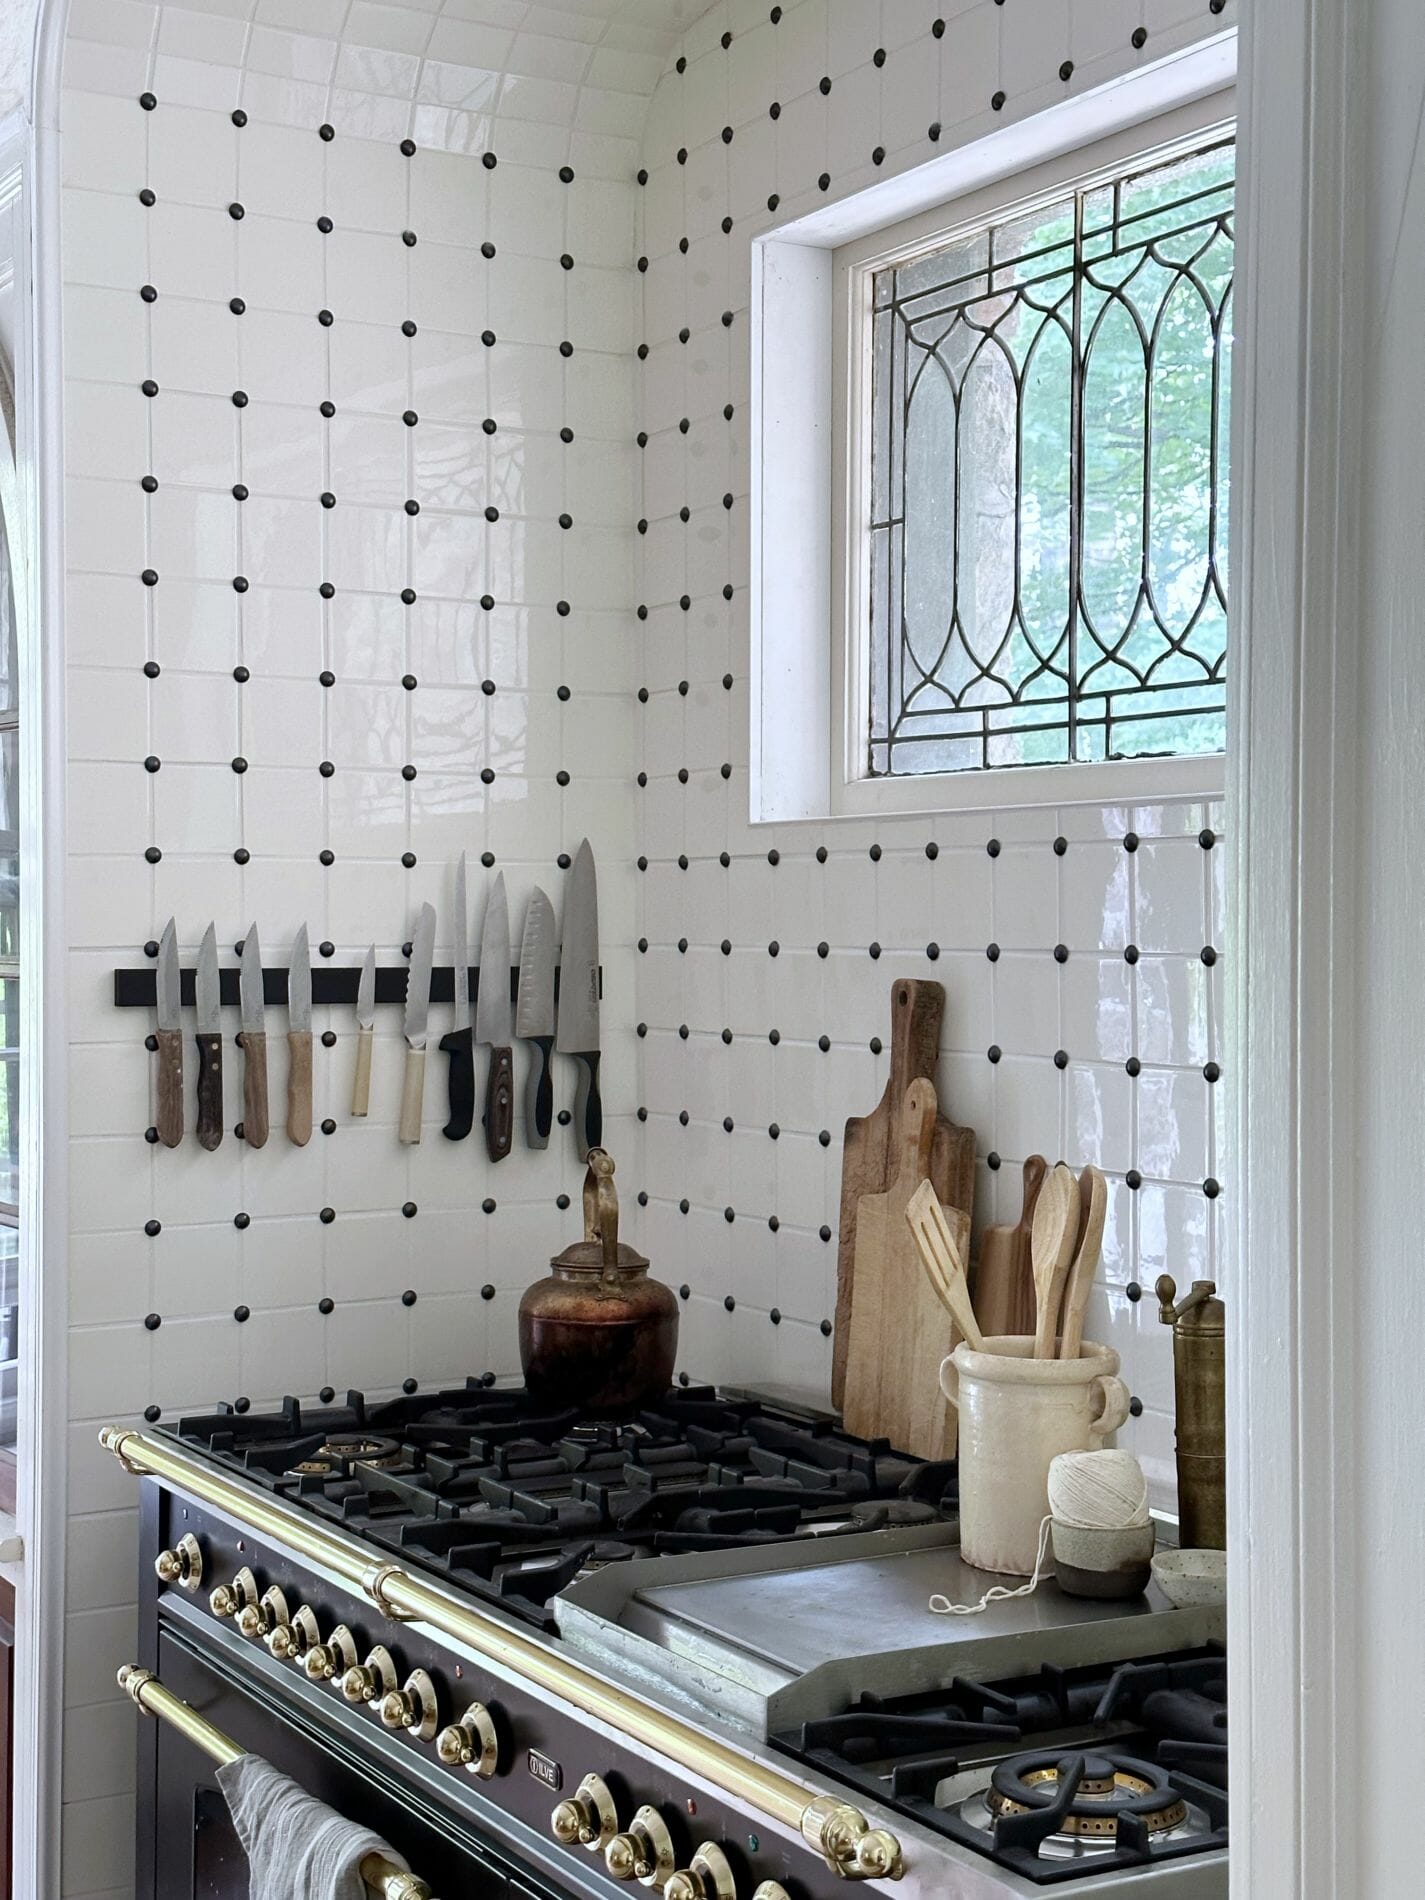 21 Tile Backsplash Behind a Stove Ideas to Add Color and Style  Kitchen  backsplash designs, Kitchen backsplash, Kitchen niche